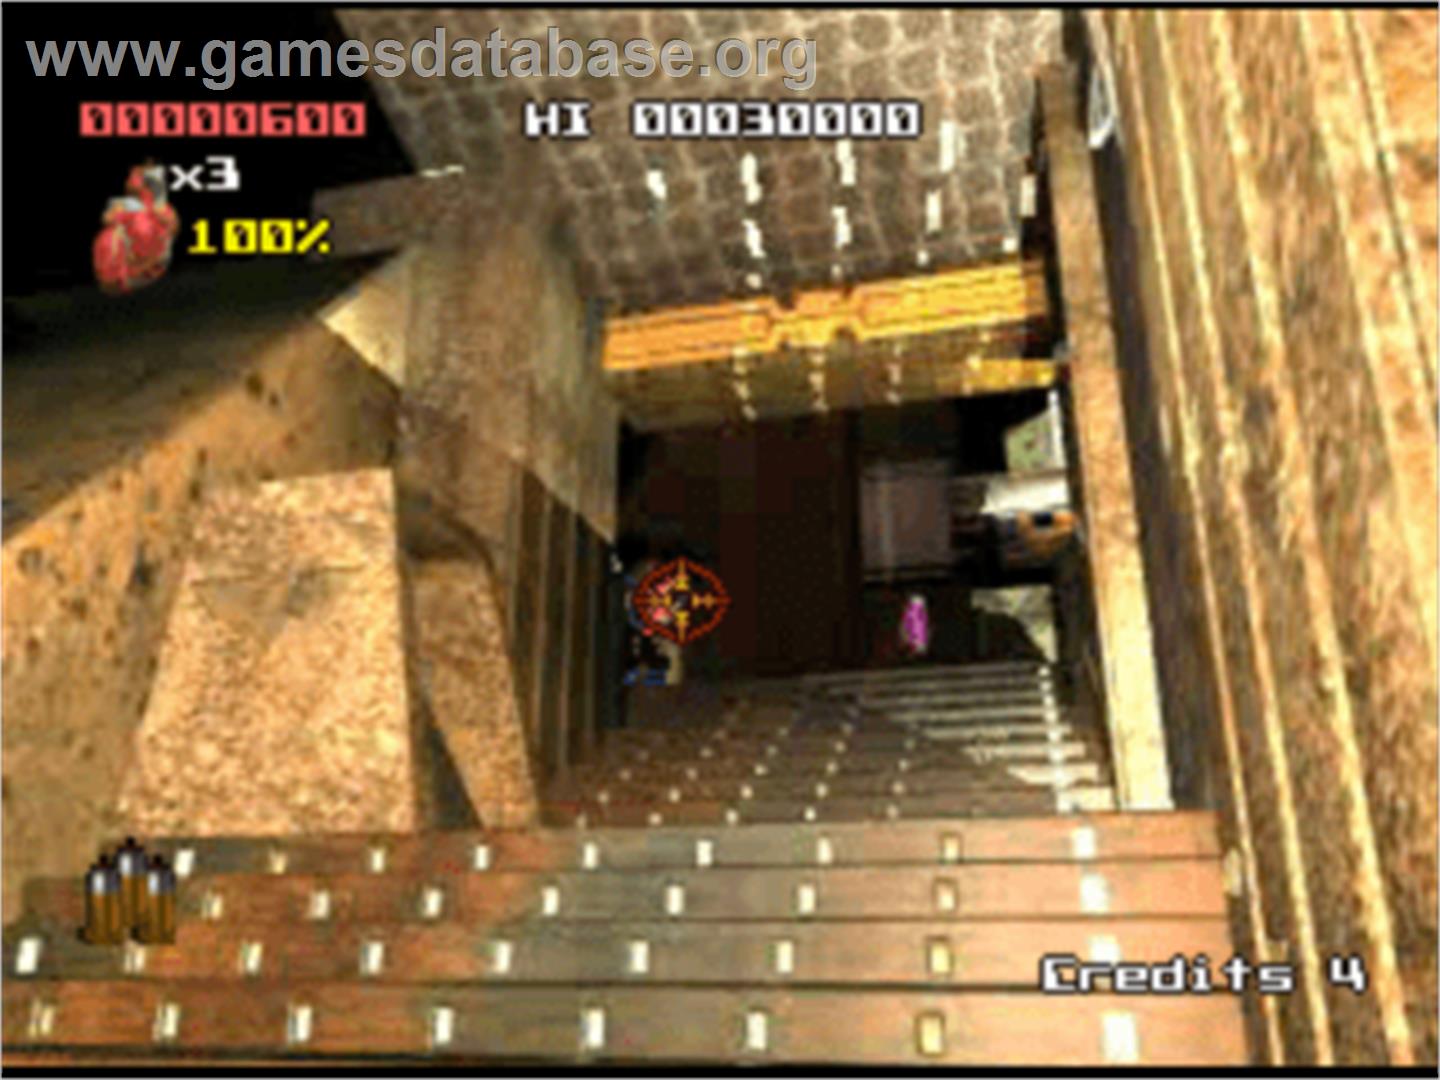 Judge Dredd - Sony Playstation - Artwork - In Game